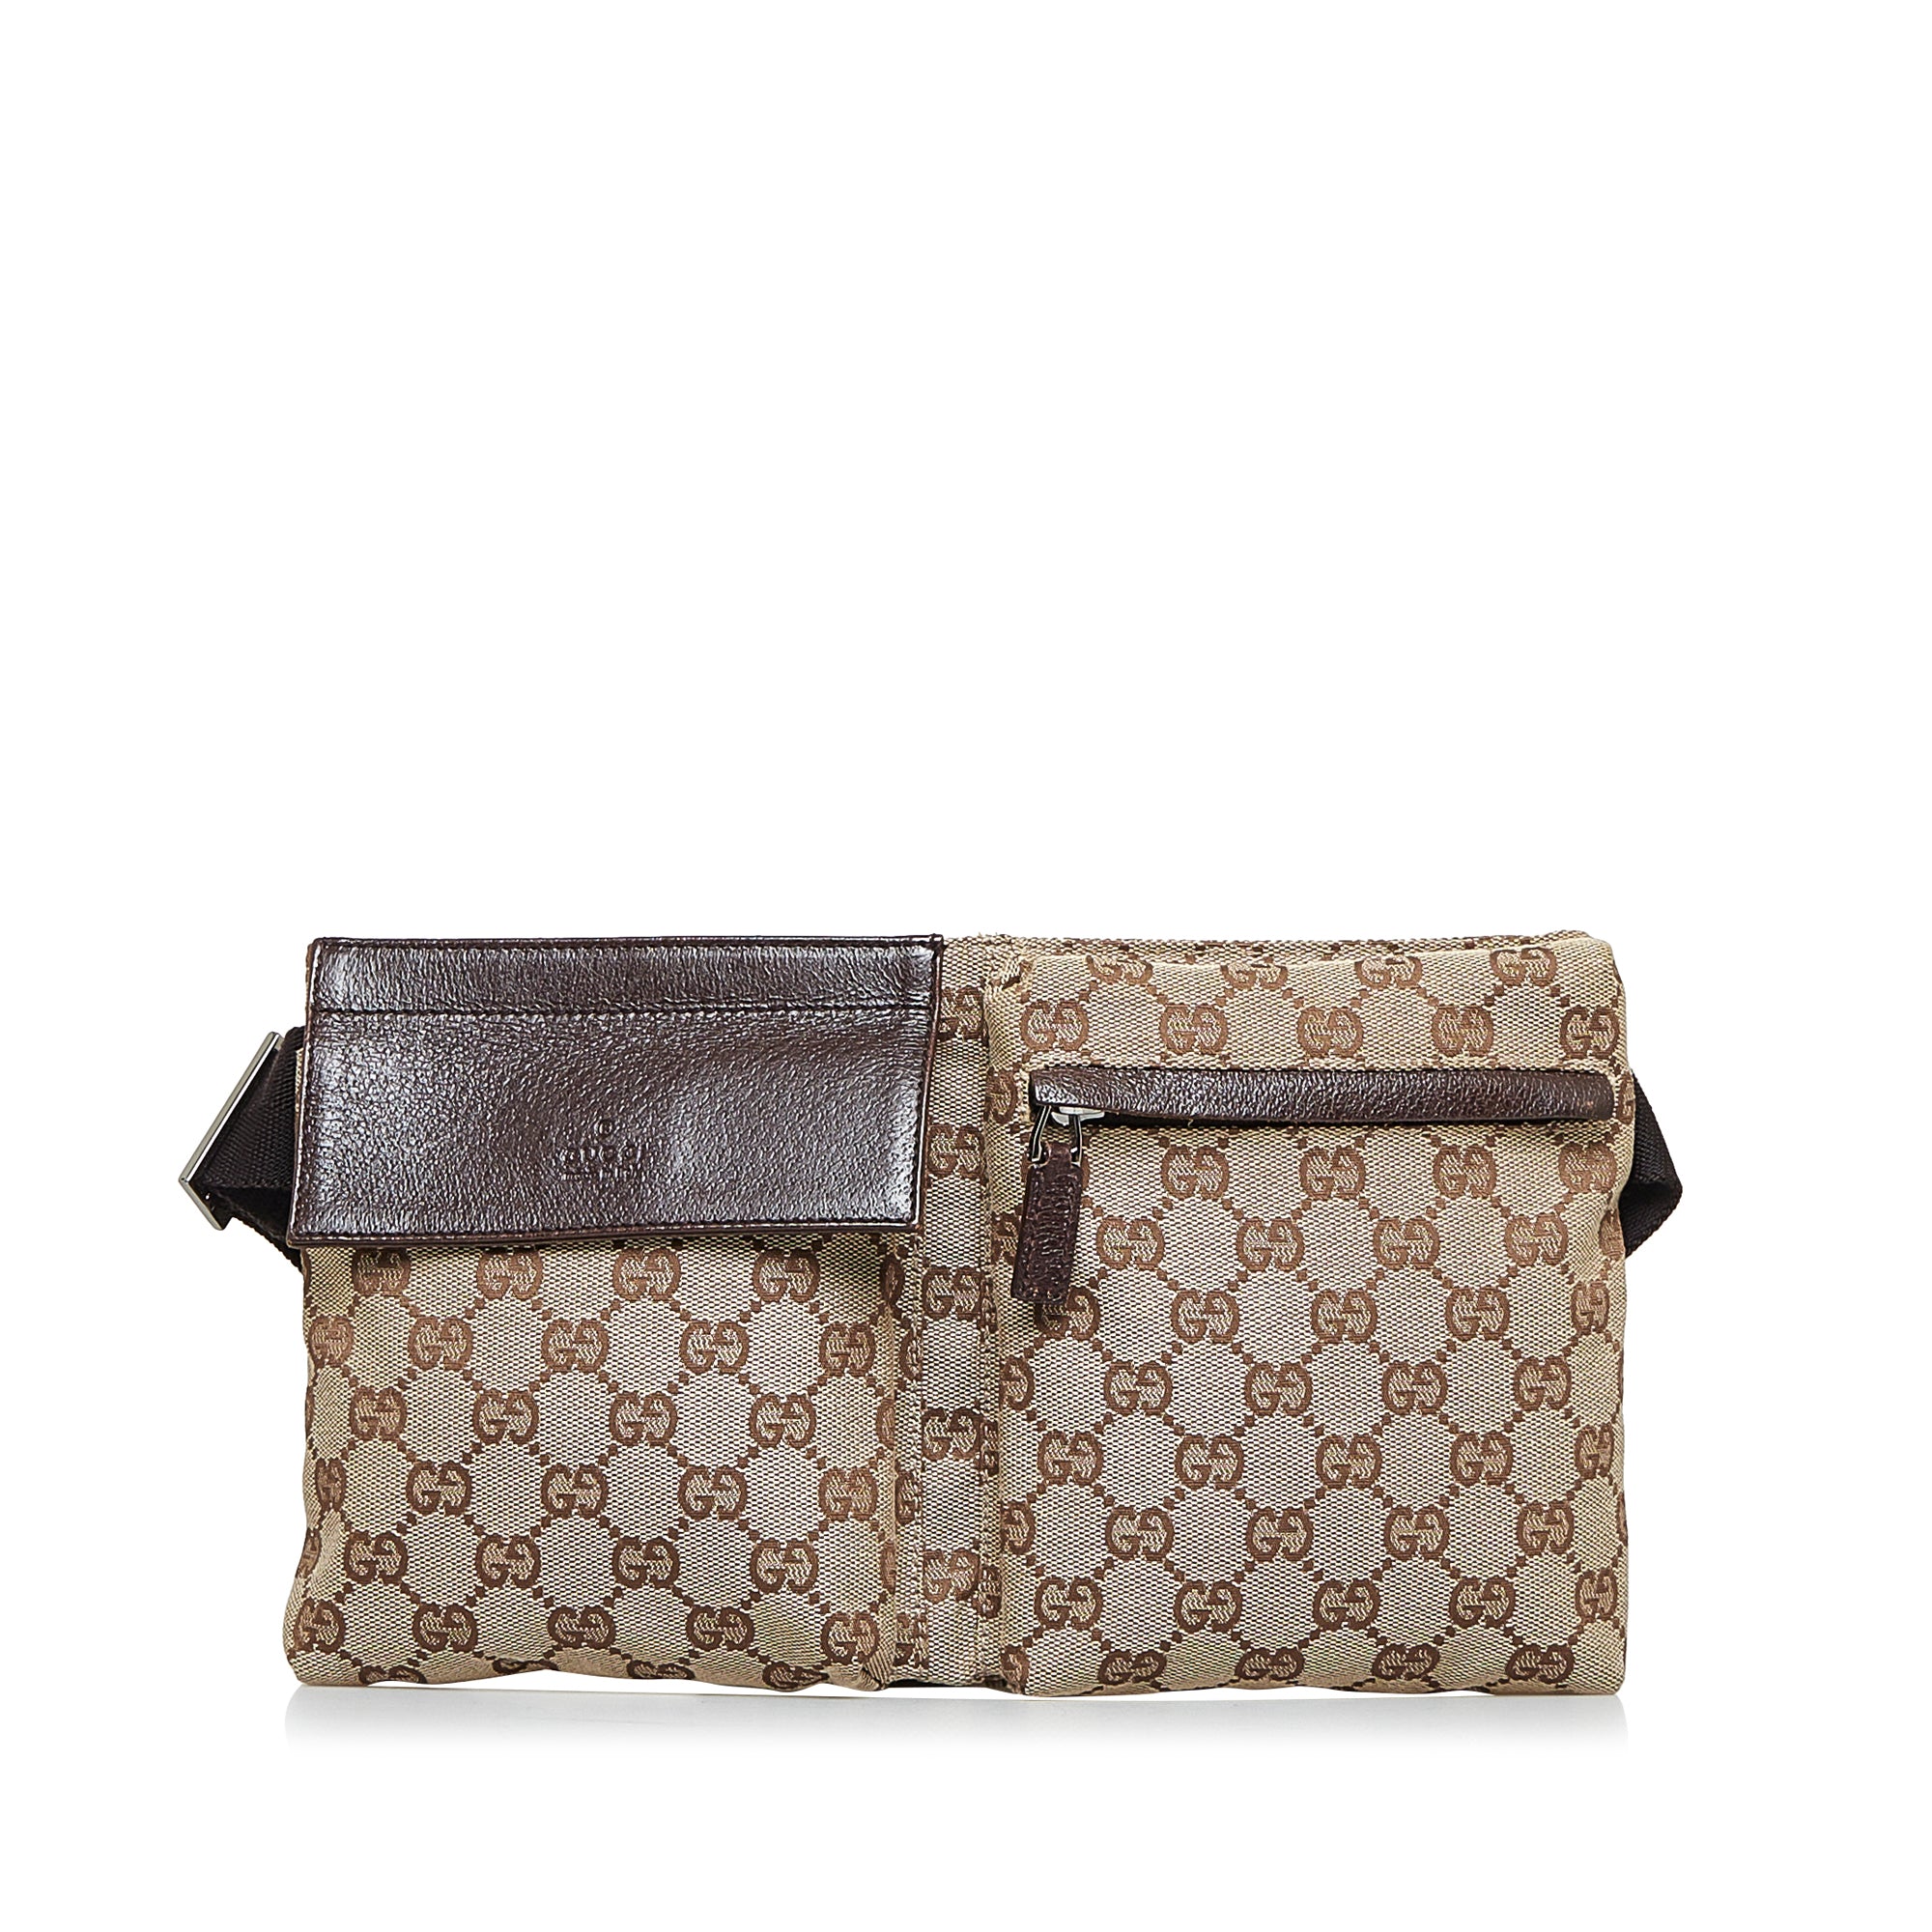 Gucci GG Supreme Canvas Belt Bag